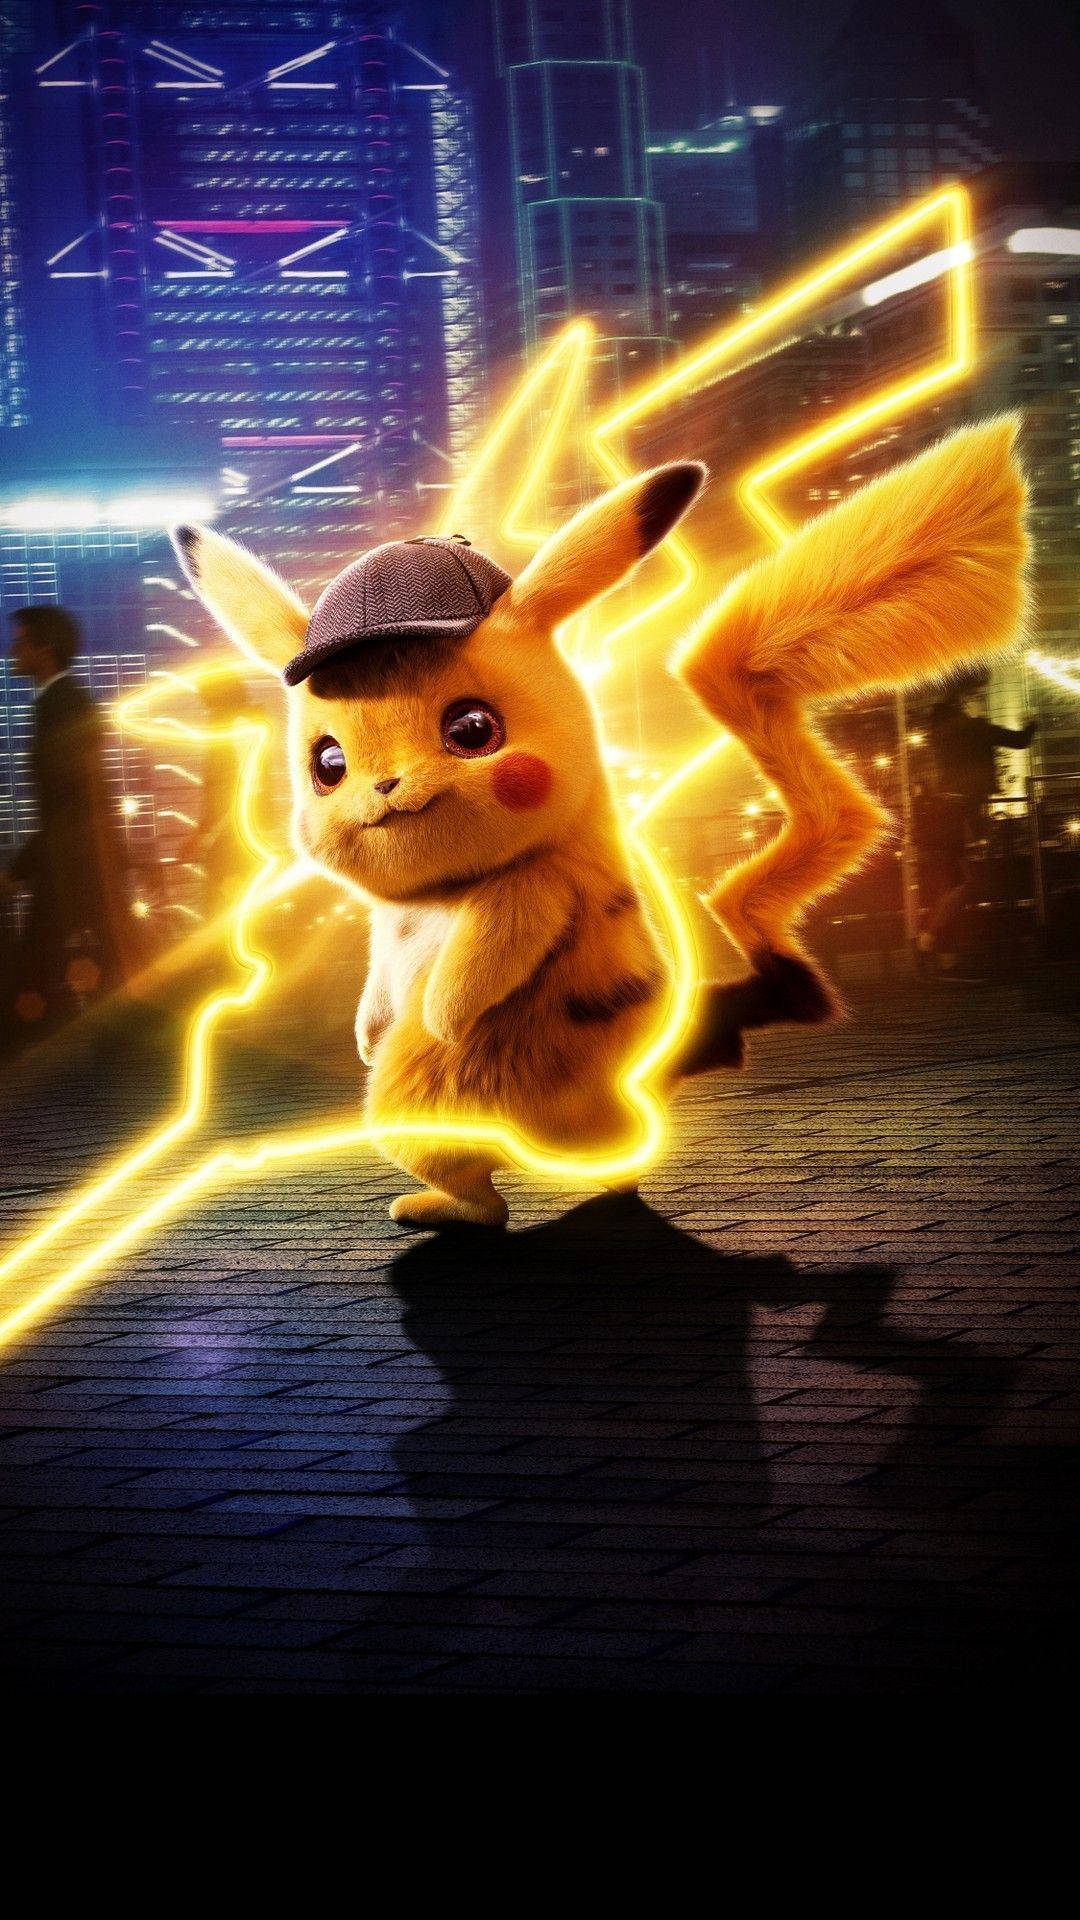 Pikachu With Yellow Lightning